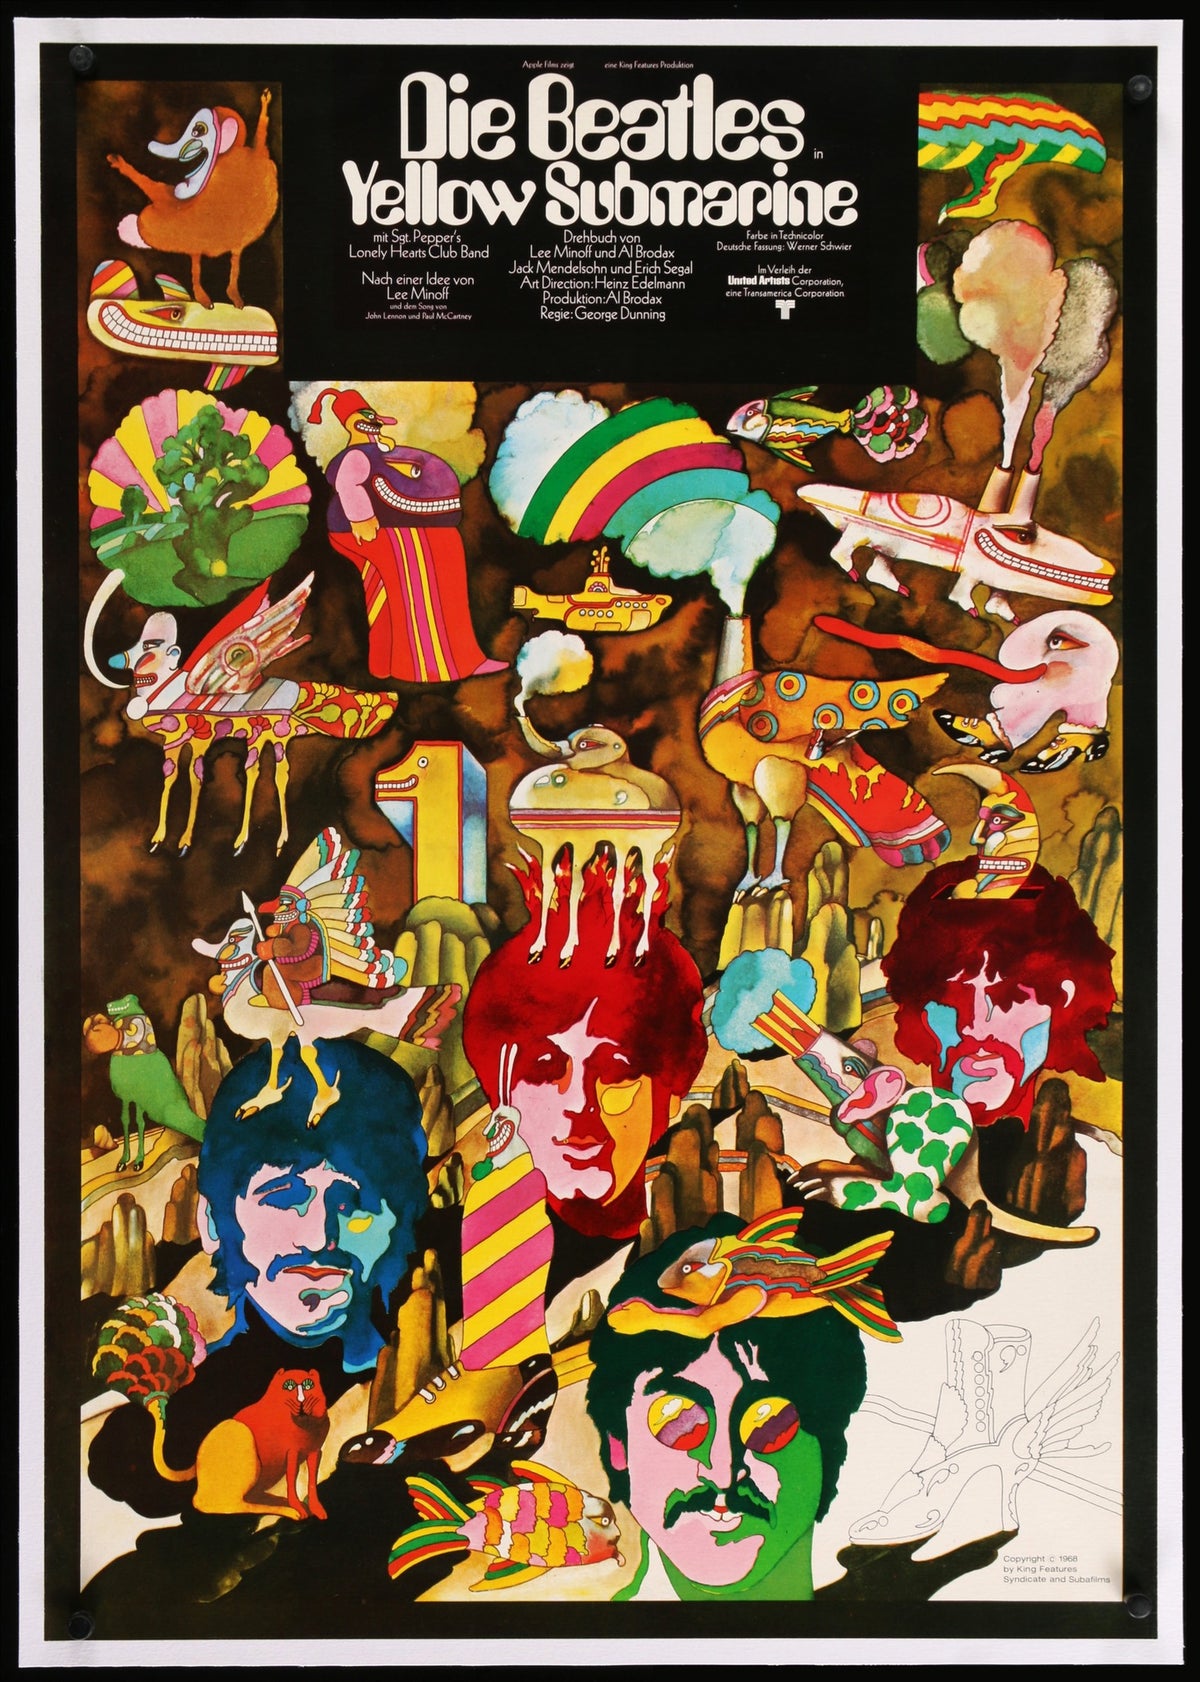 Yellow Submarine (1968) original movie poster for sale at Original Film Art